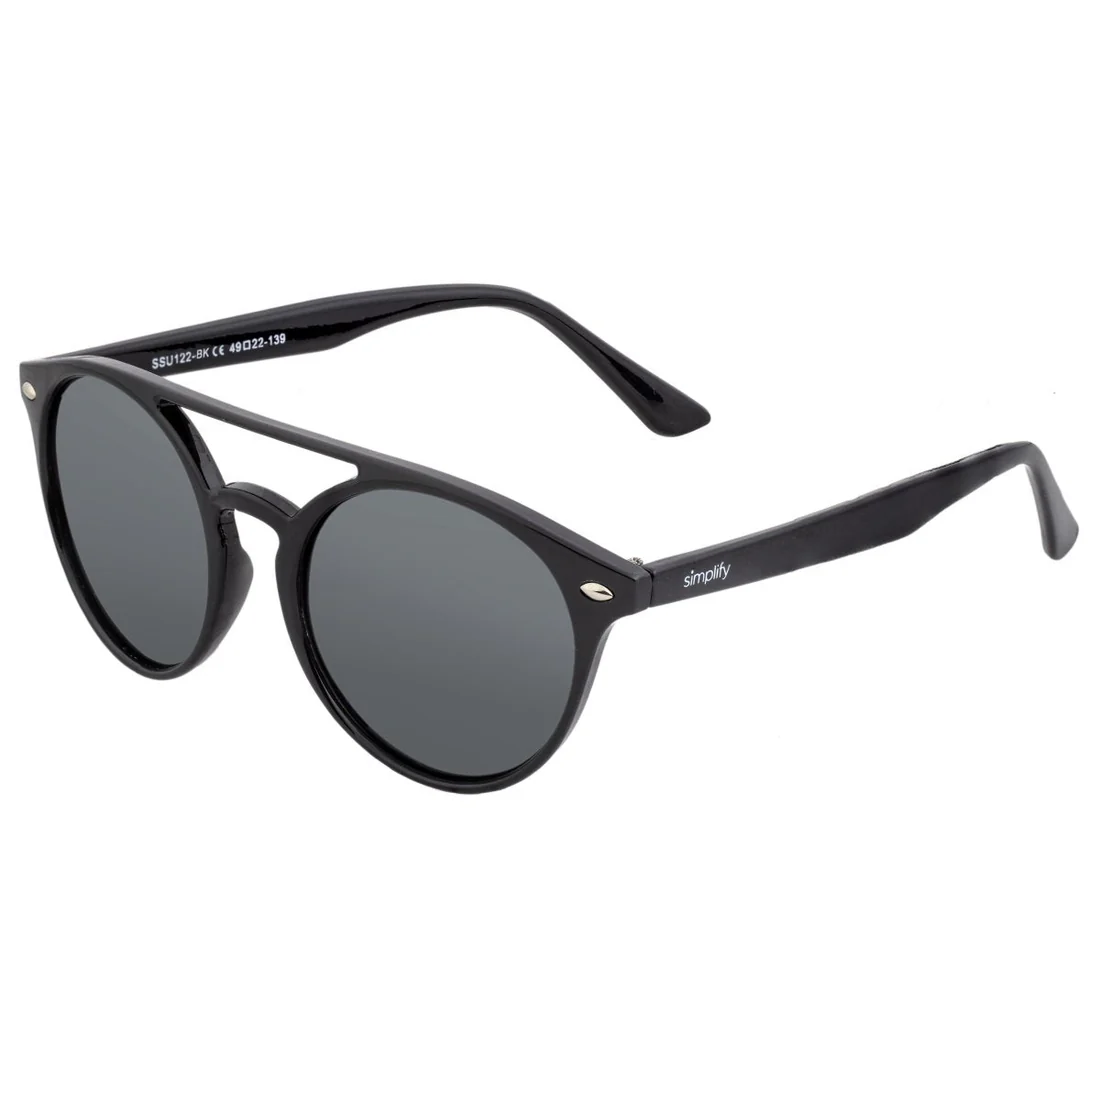 Men's & Women's Simplify Finley Polarized Sunglasses (5 Colors) $17 + Free Shipping